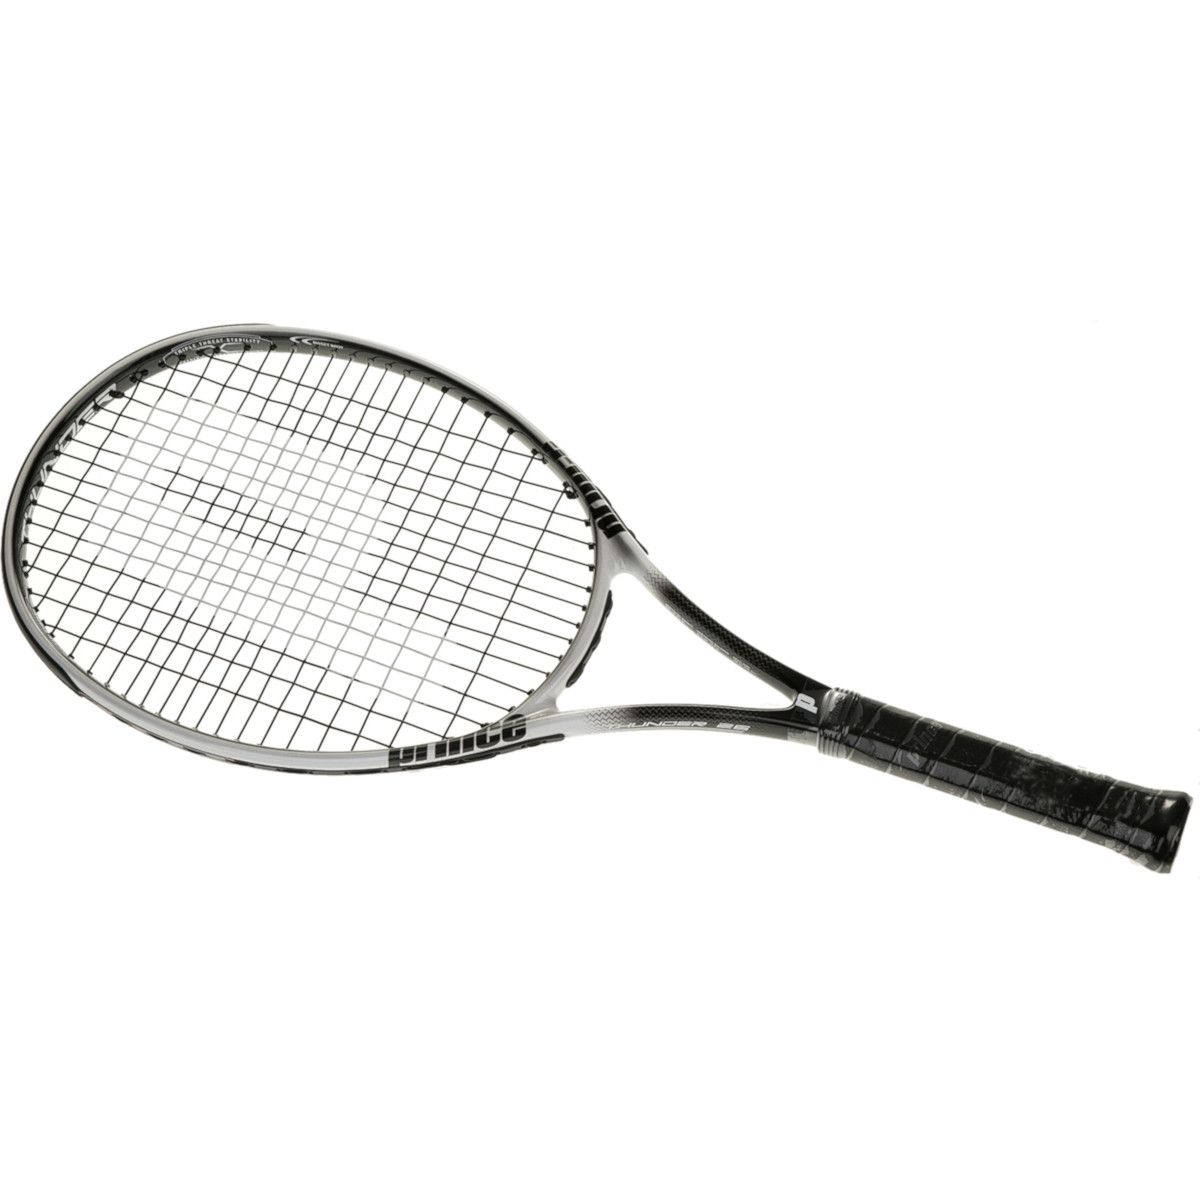 Prince Thunder 26 Junior Tennis Racquet 7T44W705